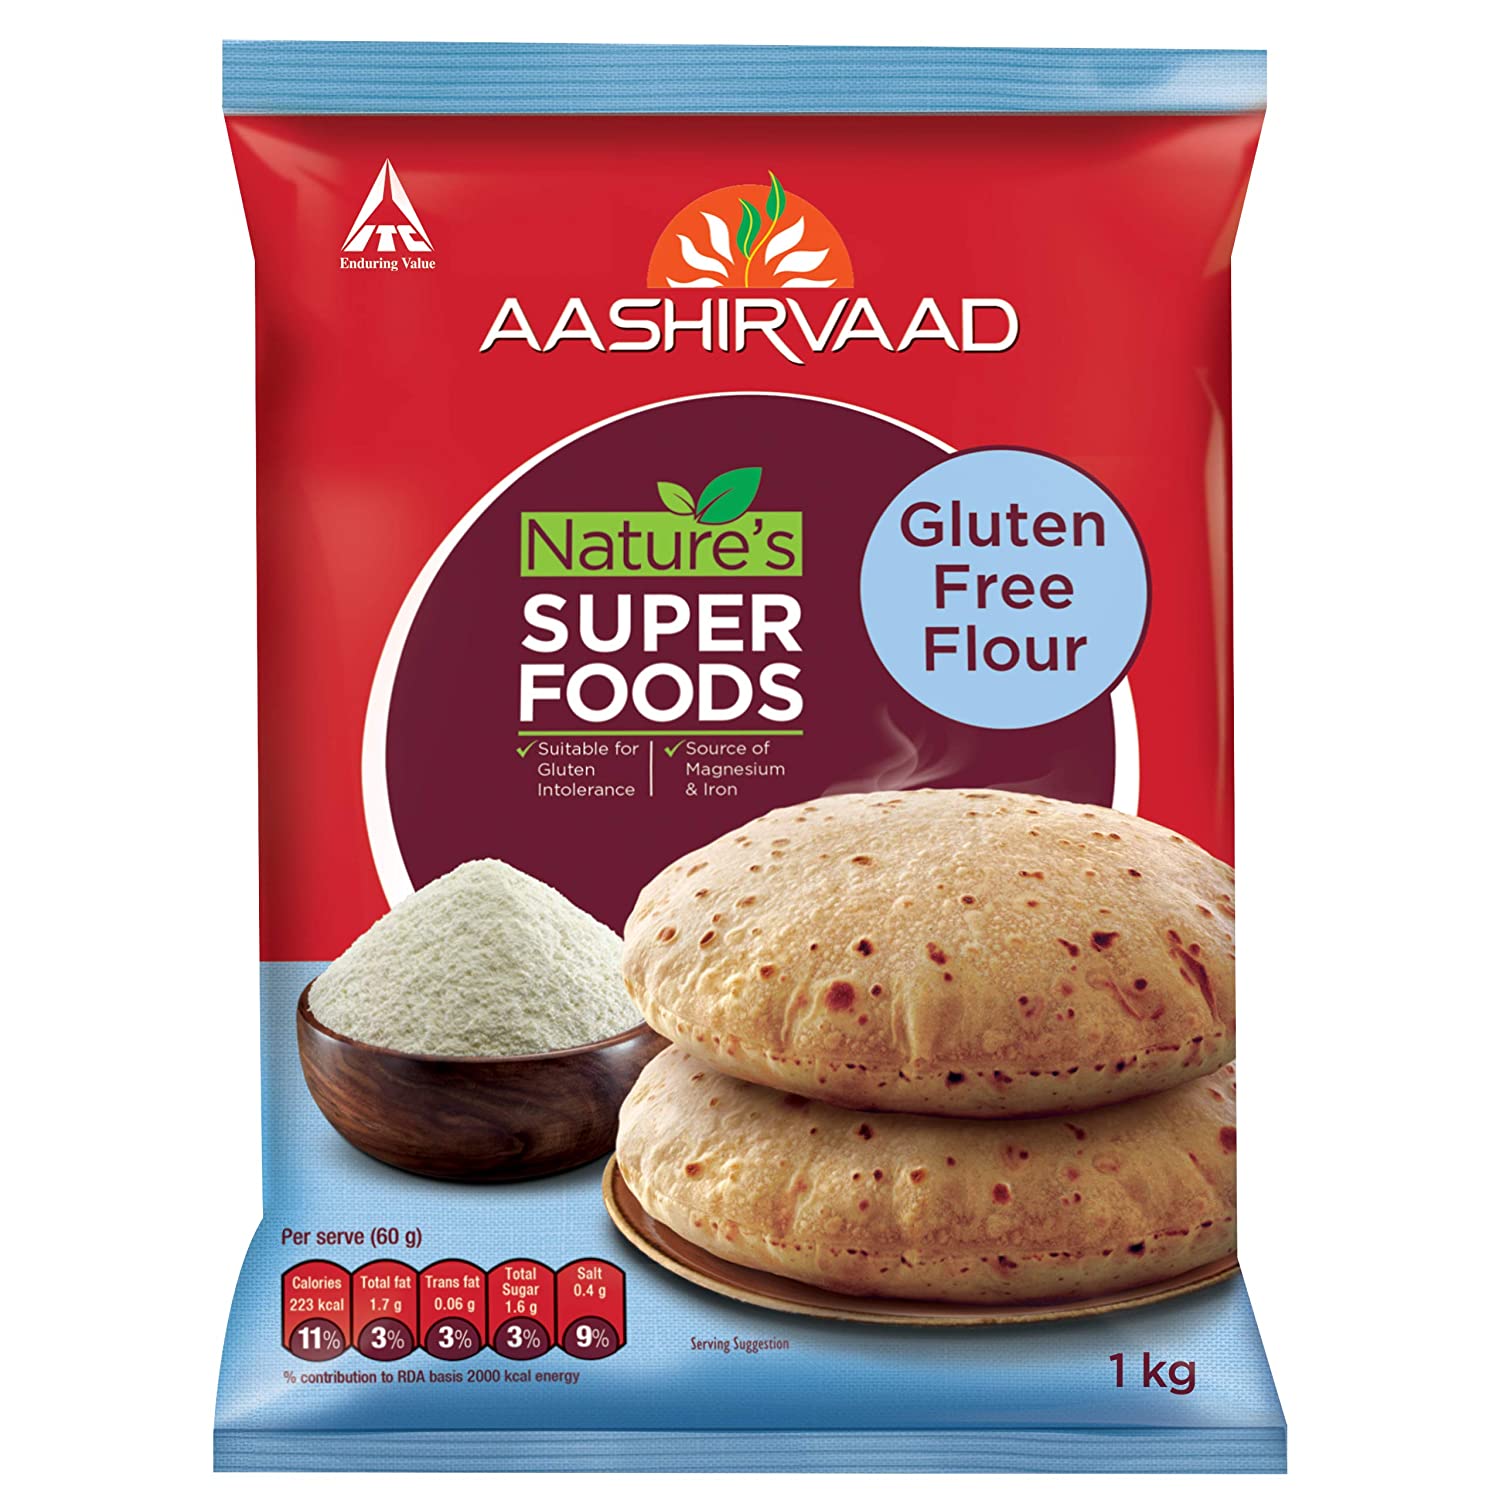 Aashirvaad Nature's Super Foods Gluten Free Flour Image